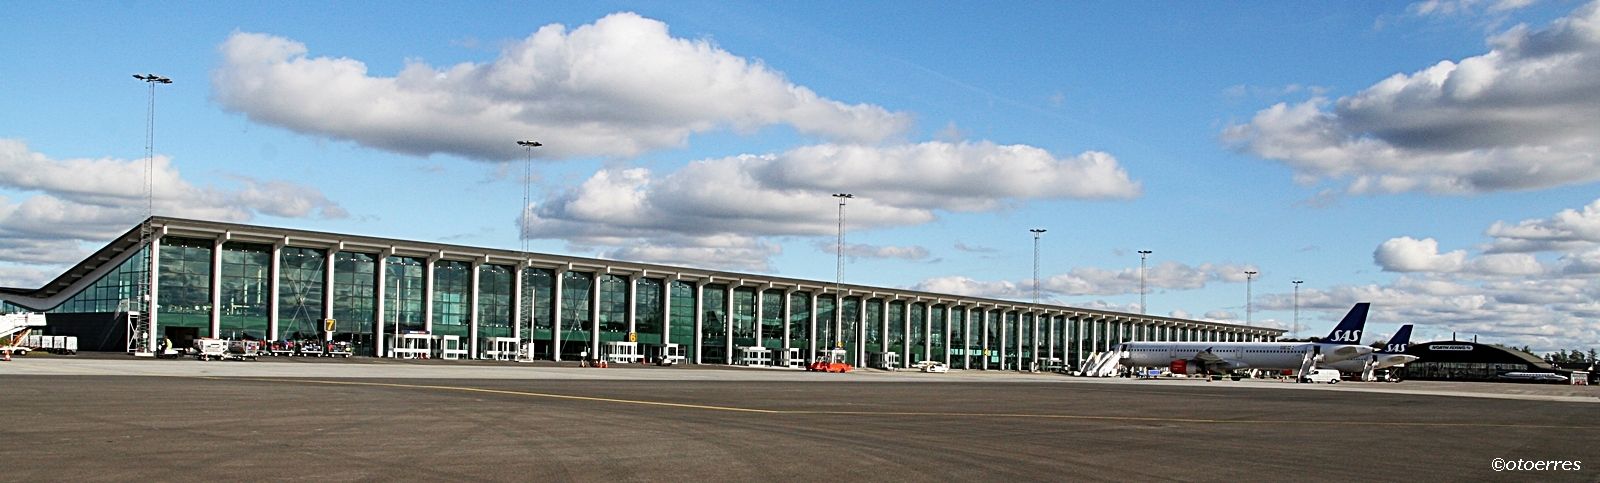 Danmar - Aalborg lufthavn - SAS - Airbus